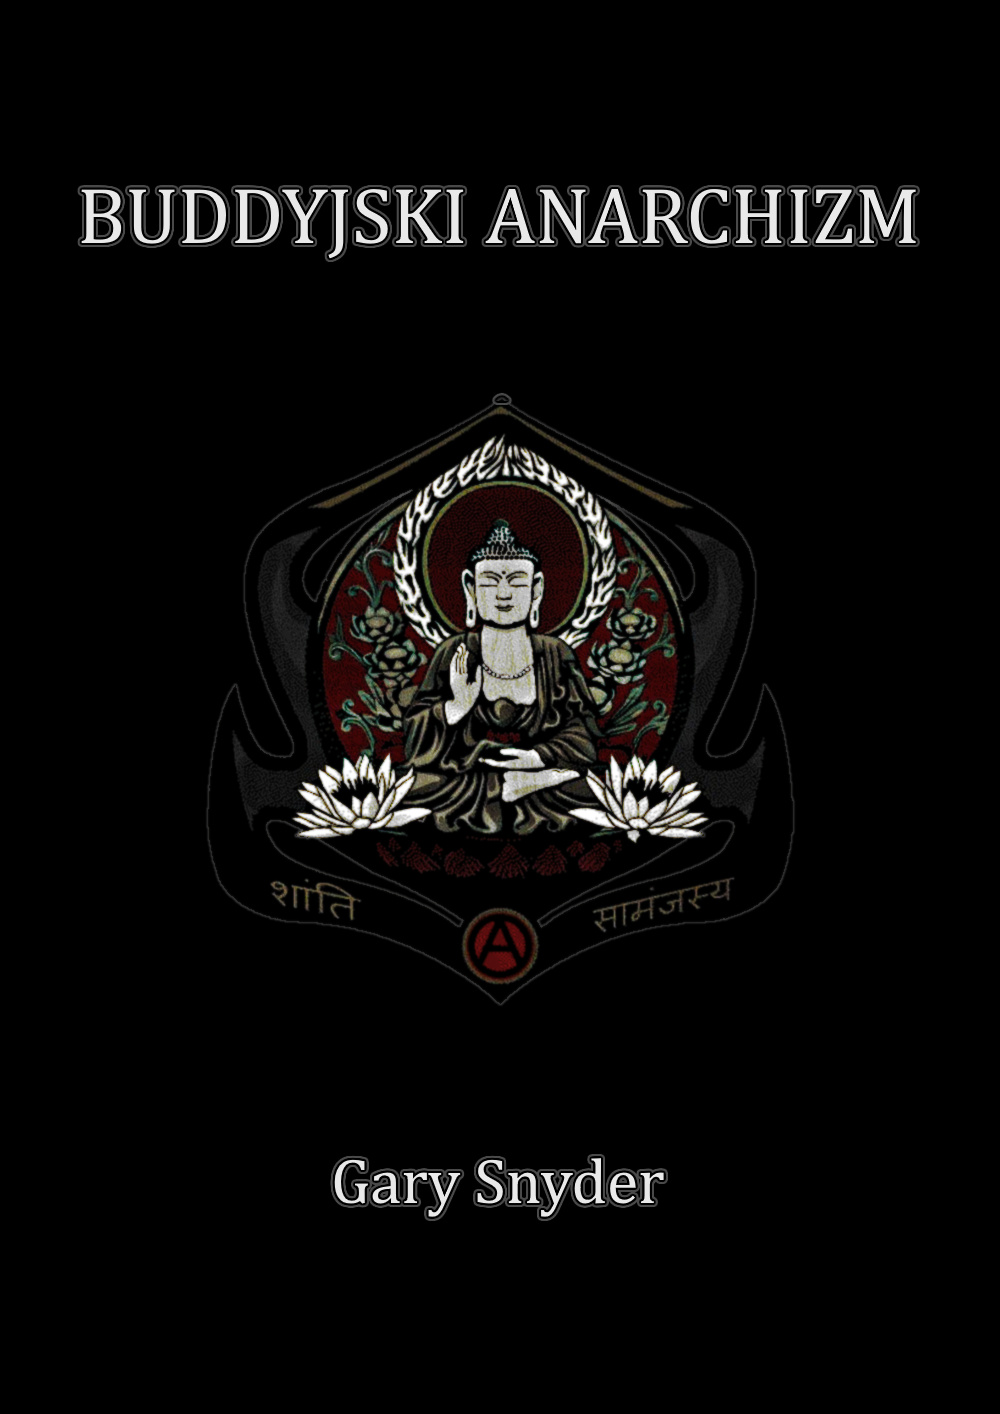 g-s-gary-snyder-buddyjski-anarchizm-1.png